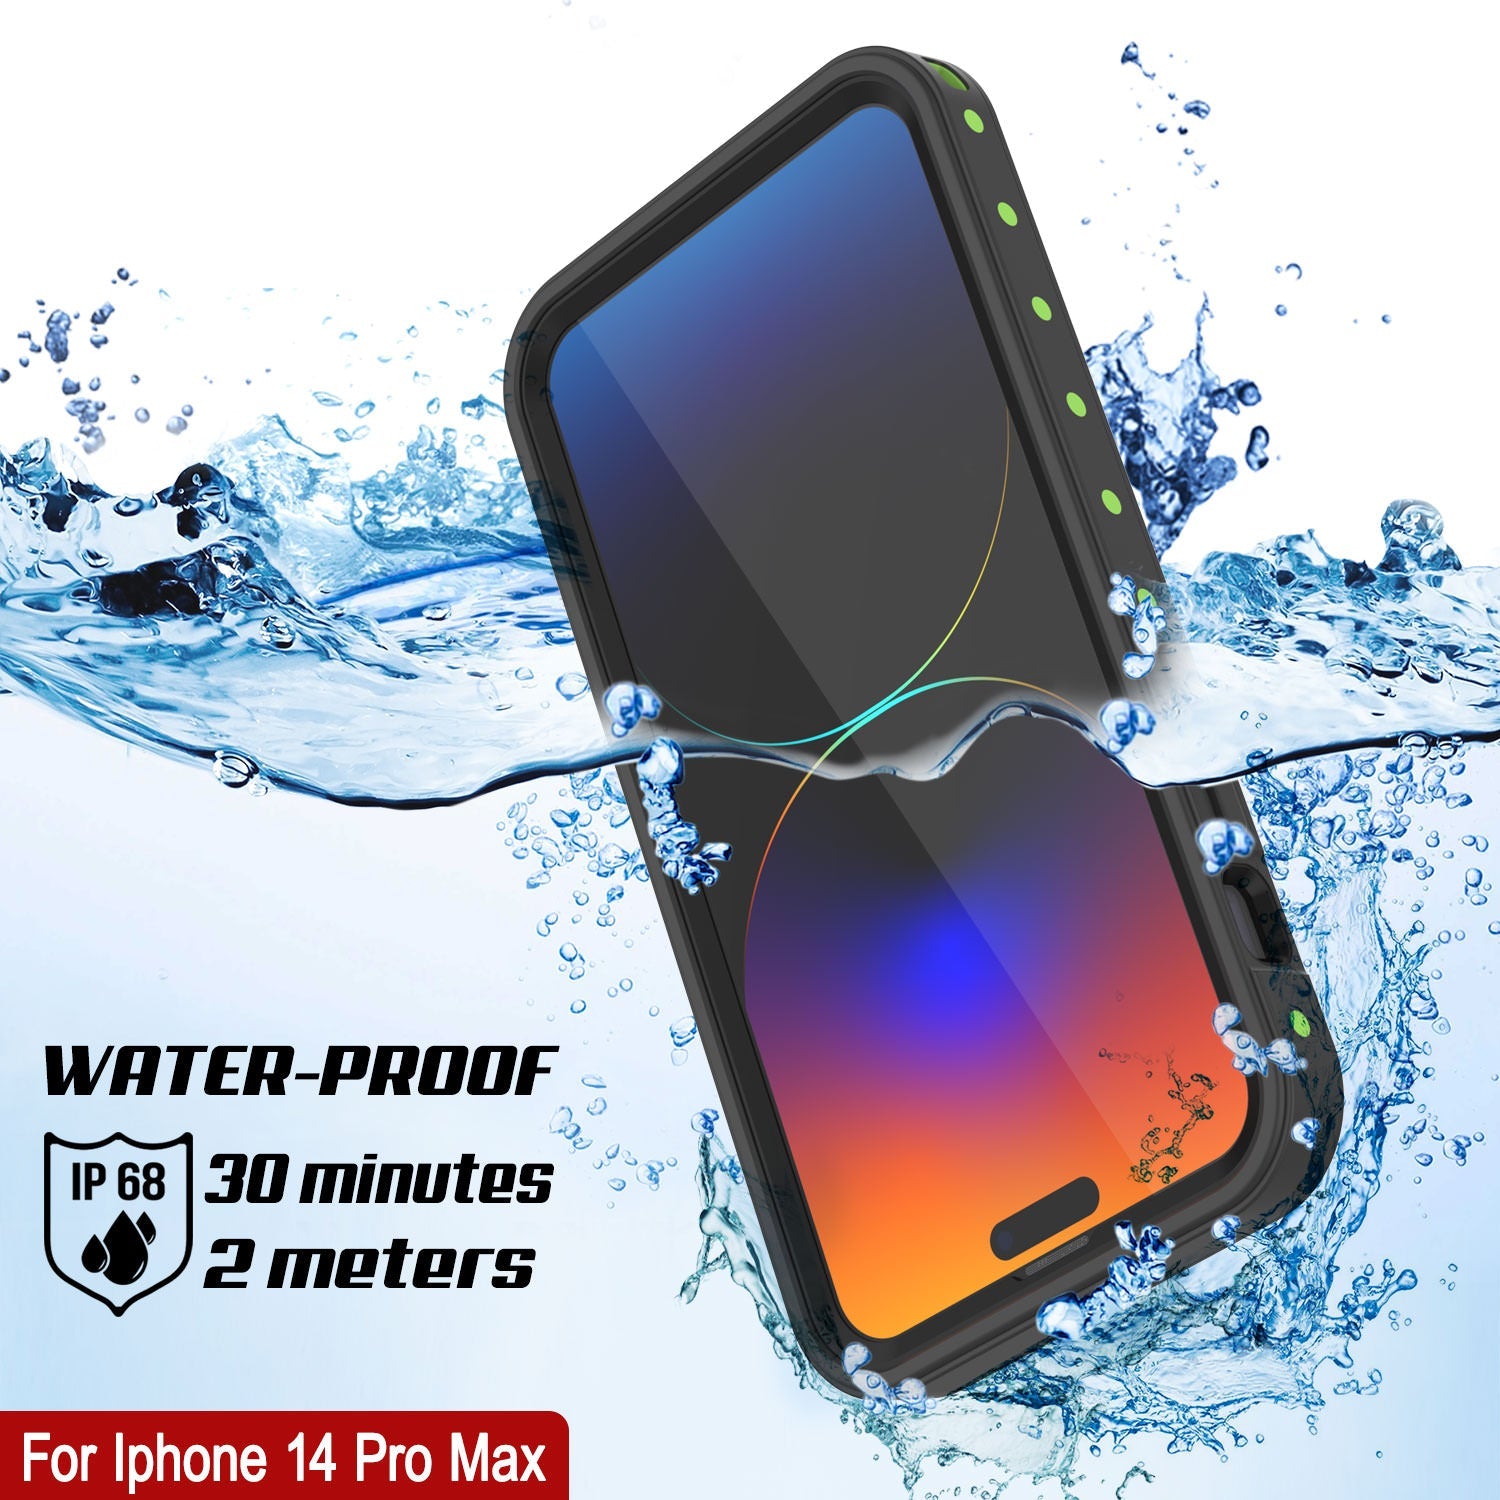 iPhone 14 Pro Max Waterproof IP68 Case, Punkcase [Light green] [StudStar Series] [Slim Fit] [Dirtproof]